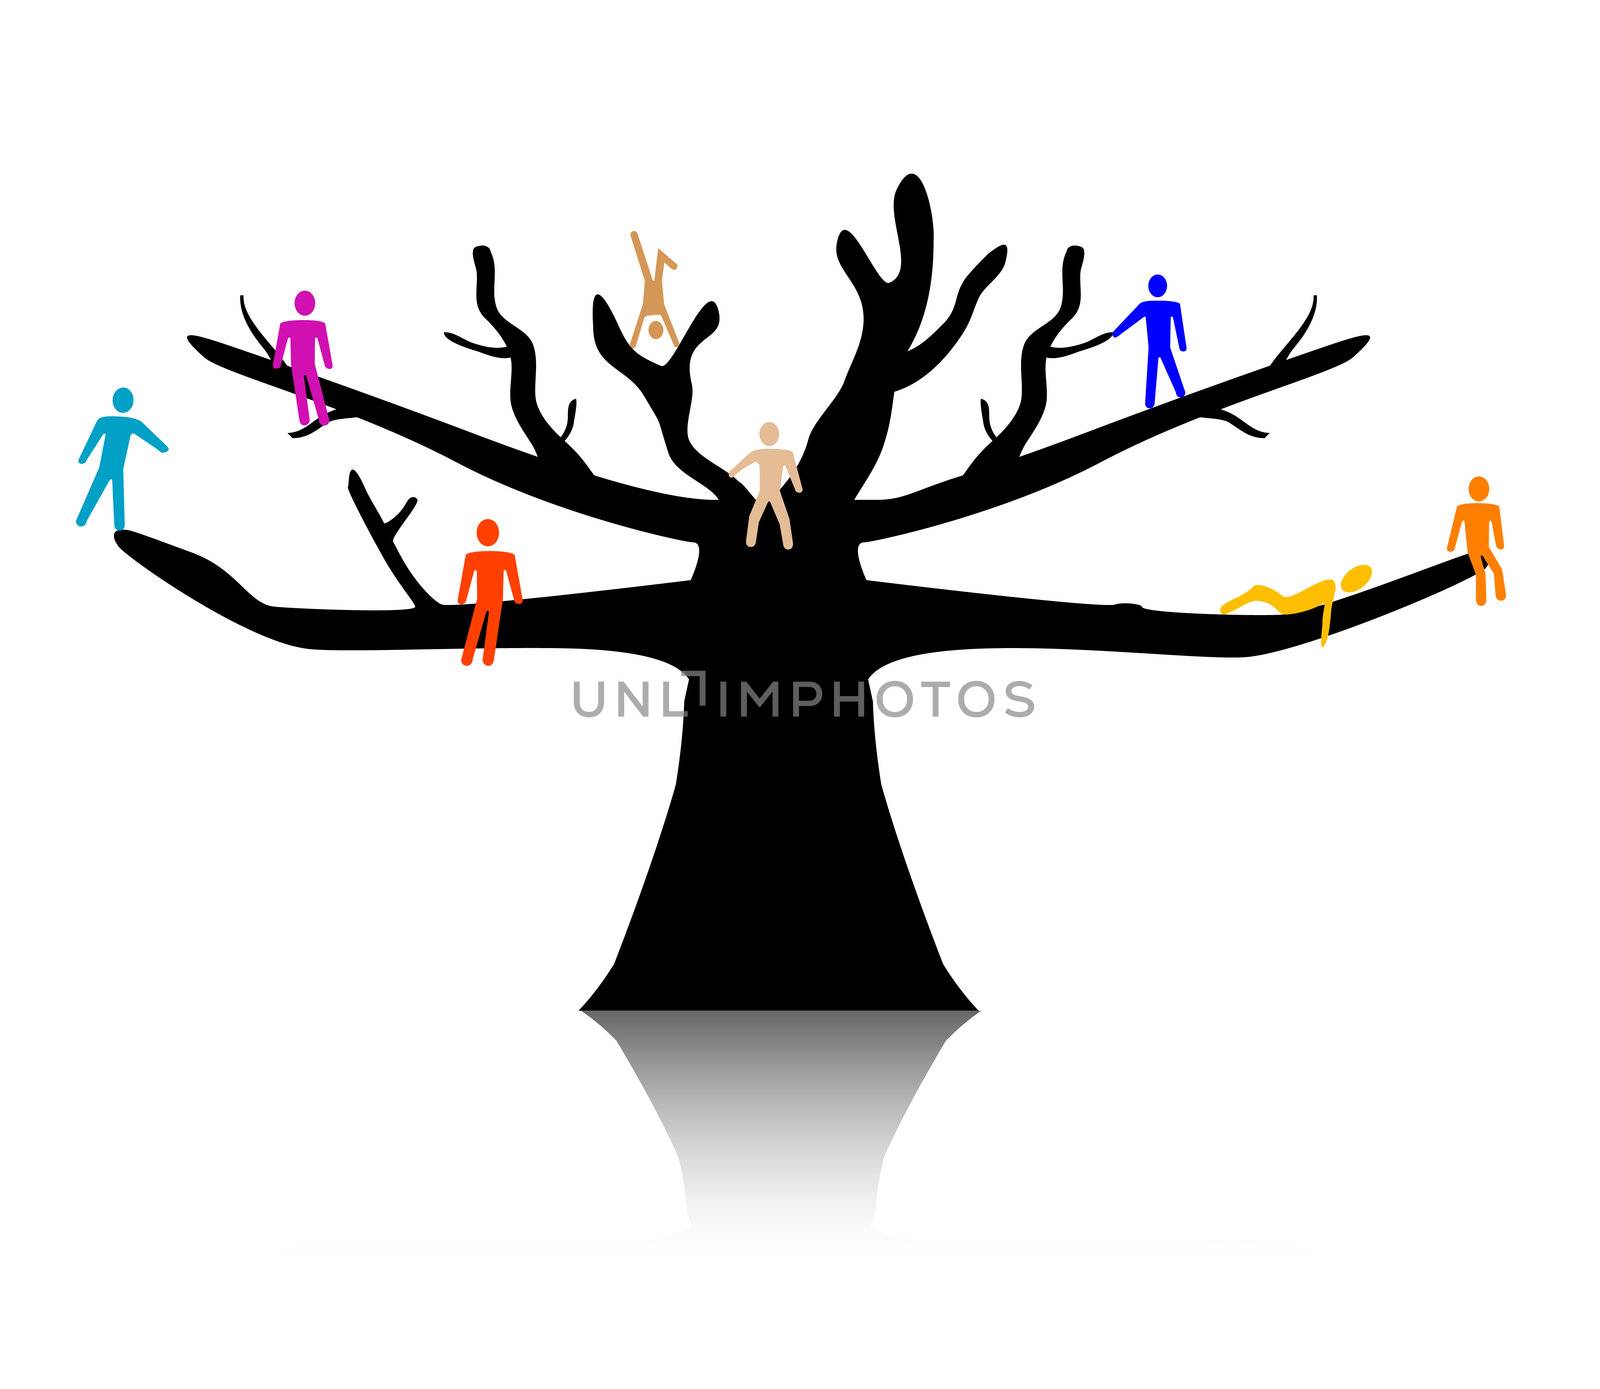 People in treetop by skvoor